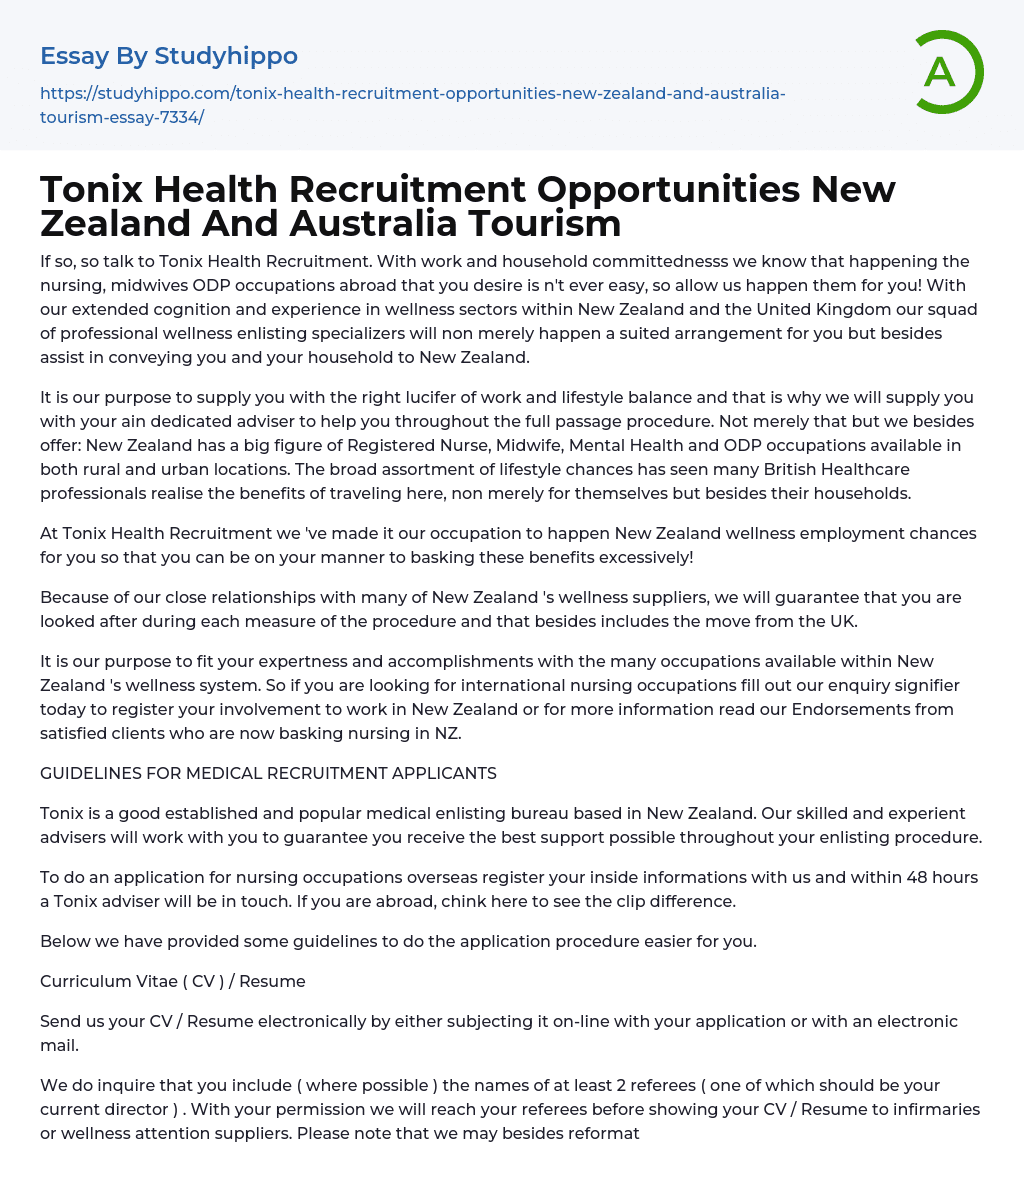 Tonix Health Recruitment Opportunities New Zealand And Australia Tourism Essay Example